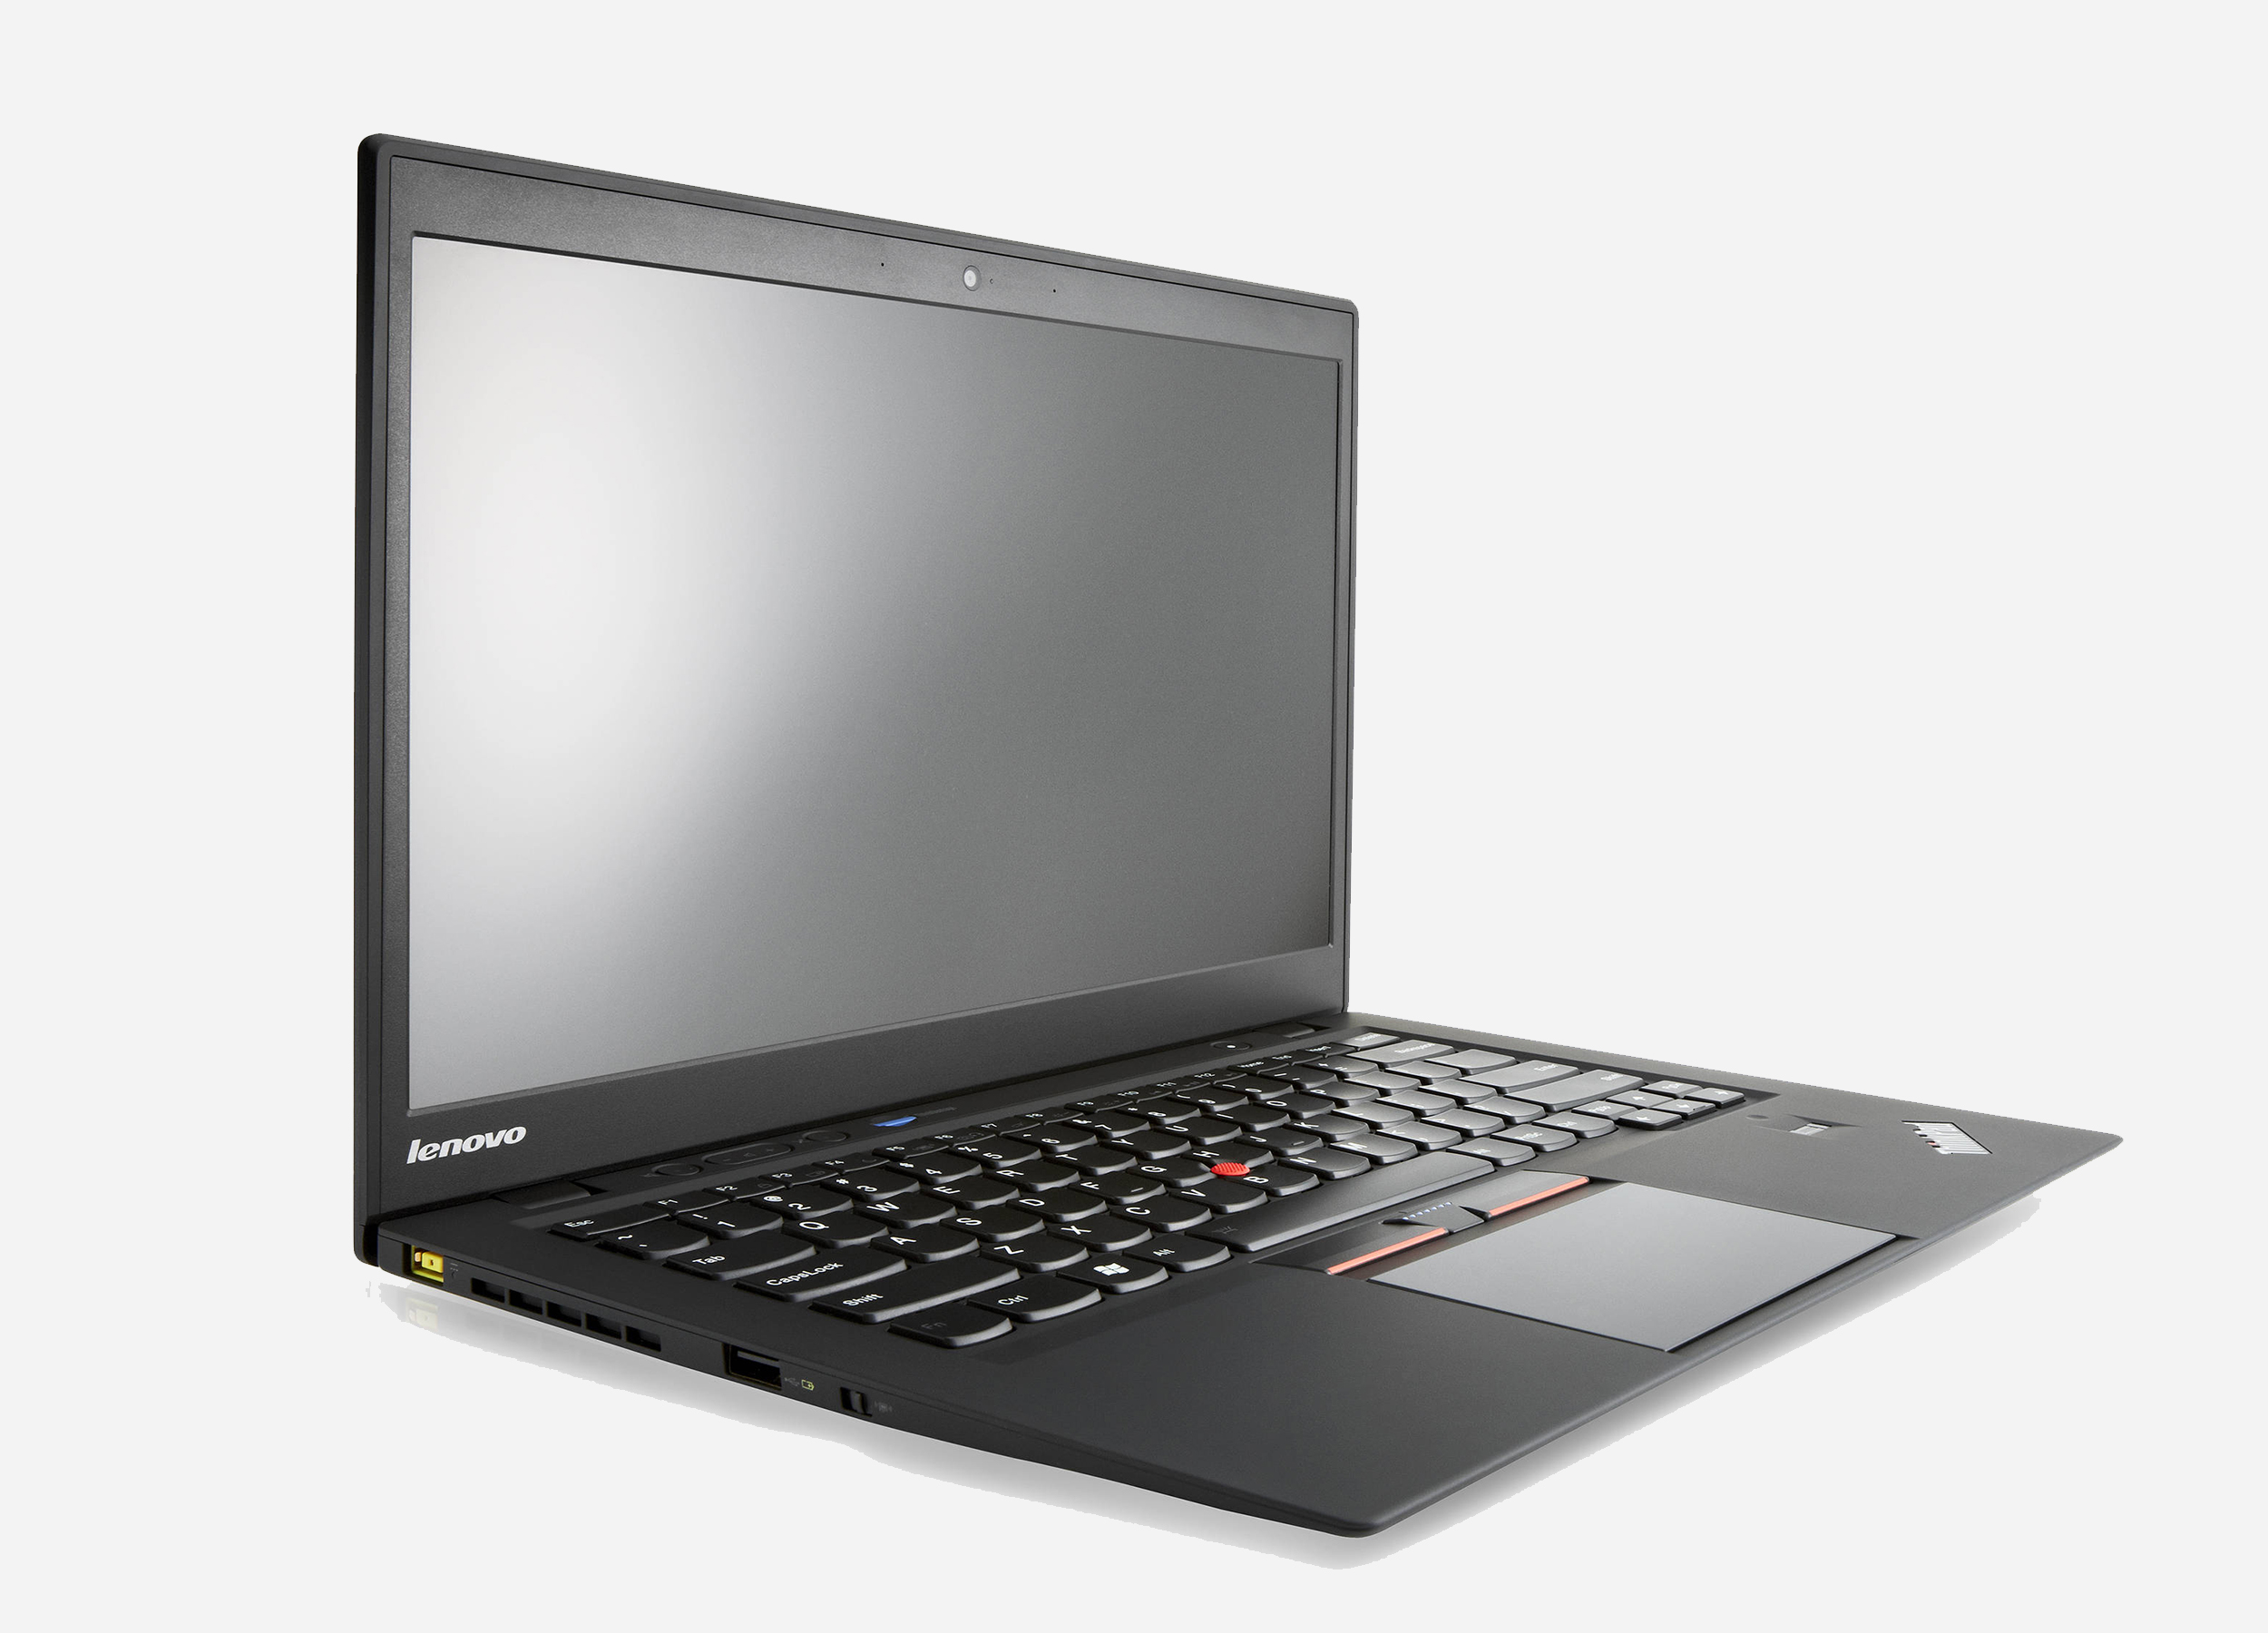 Lenovo ThinkPad X1 Carbon I5 4210U